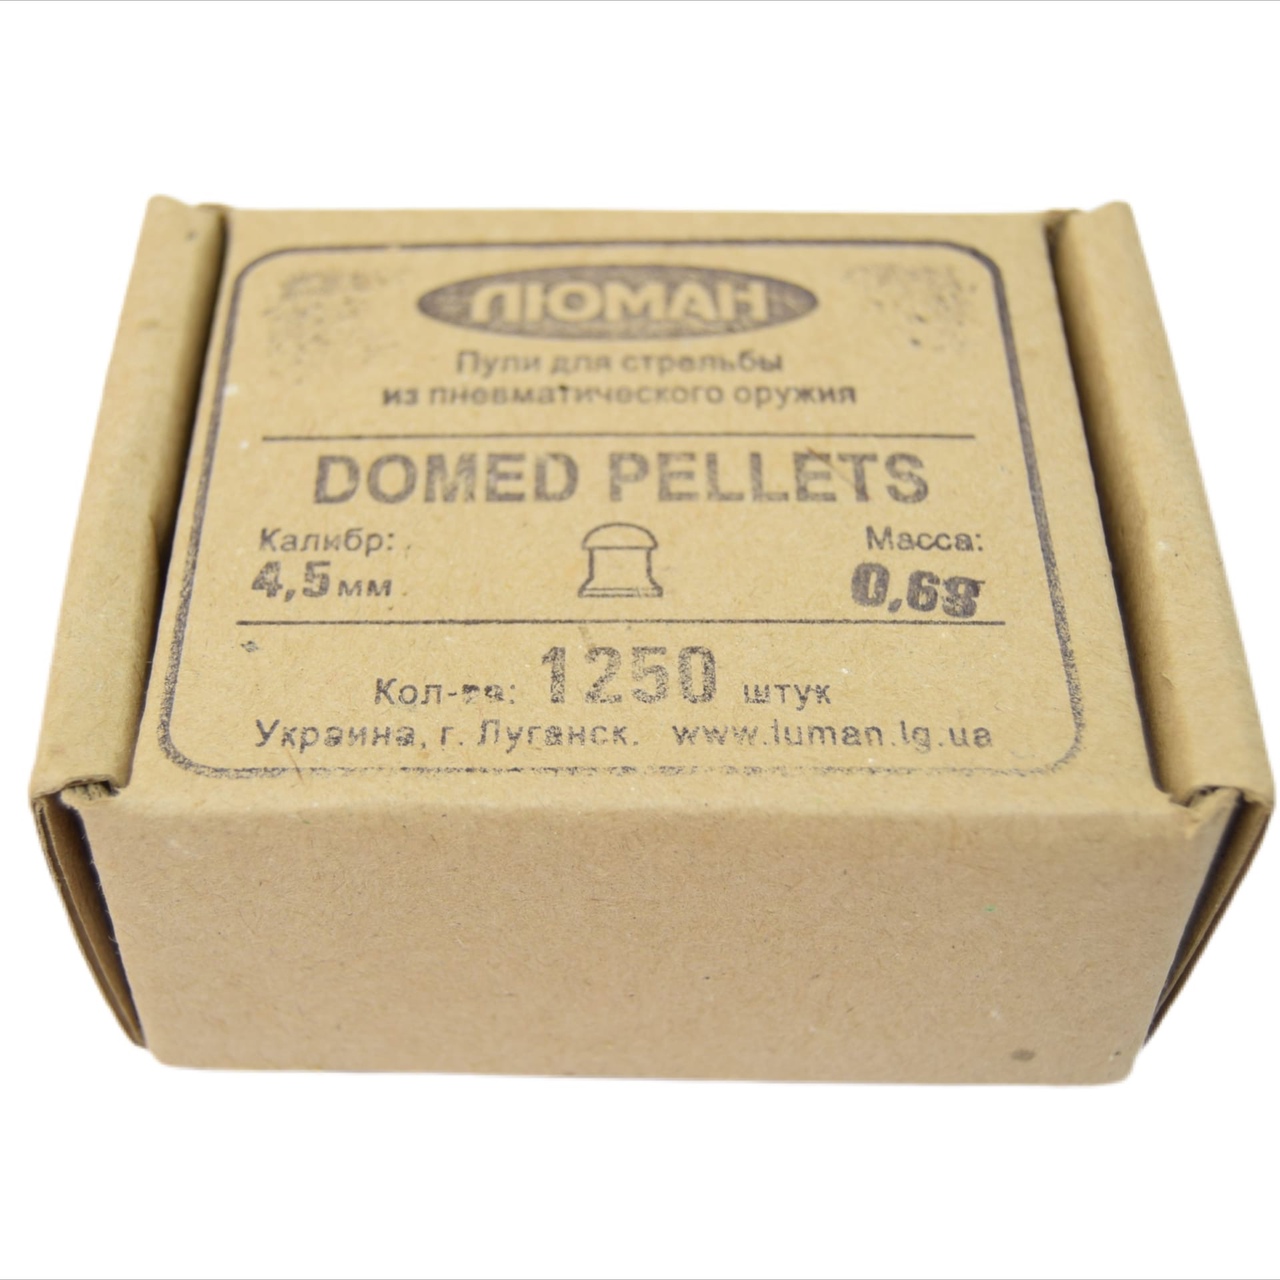 Пульки Люман Domed pellets, калибр 4,5 мм., вес 0,68 г. 1250 шт